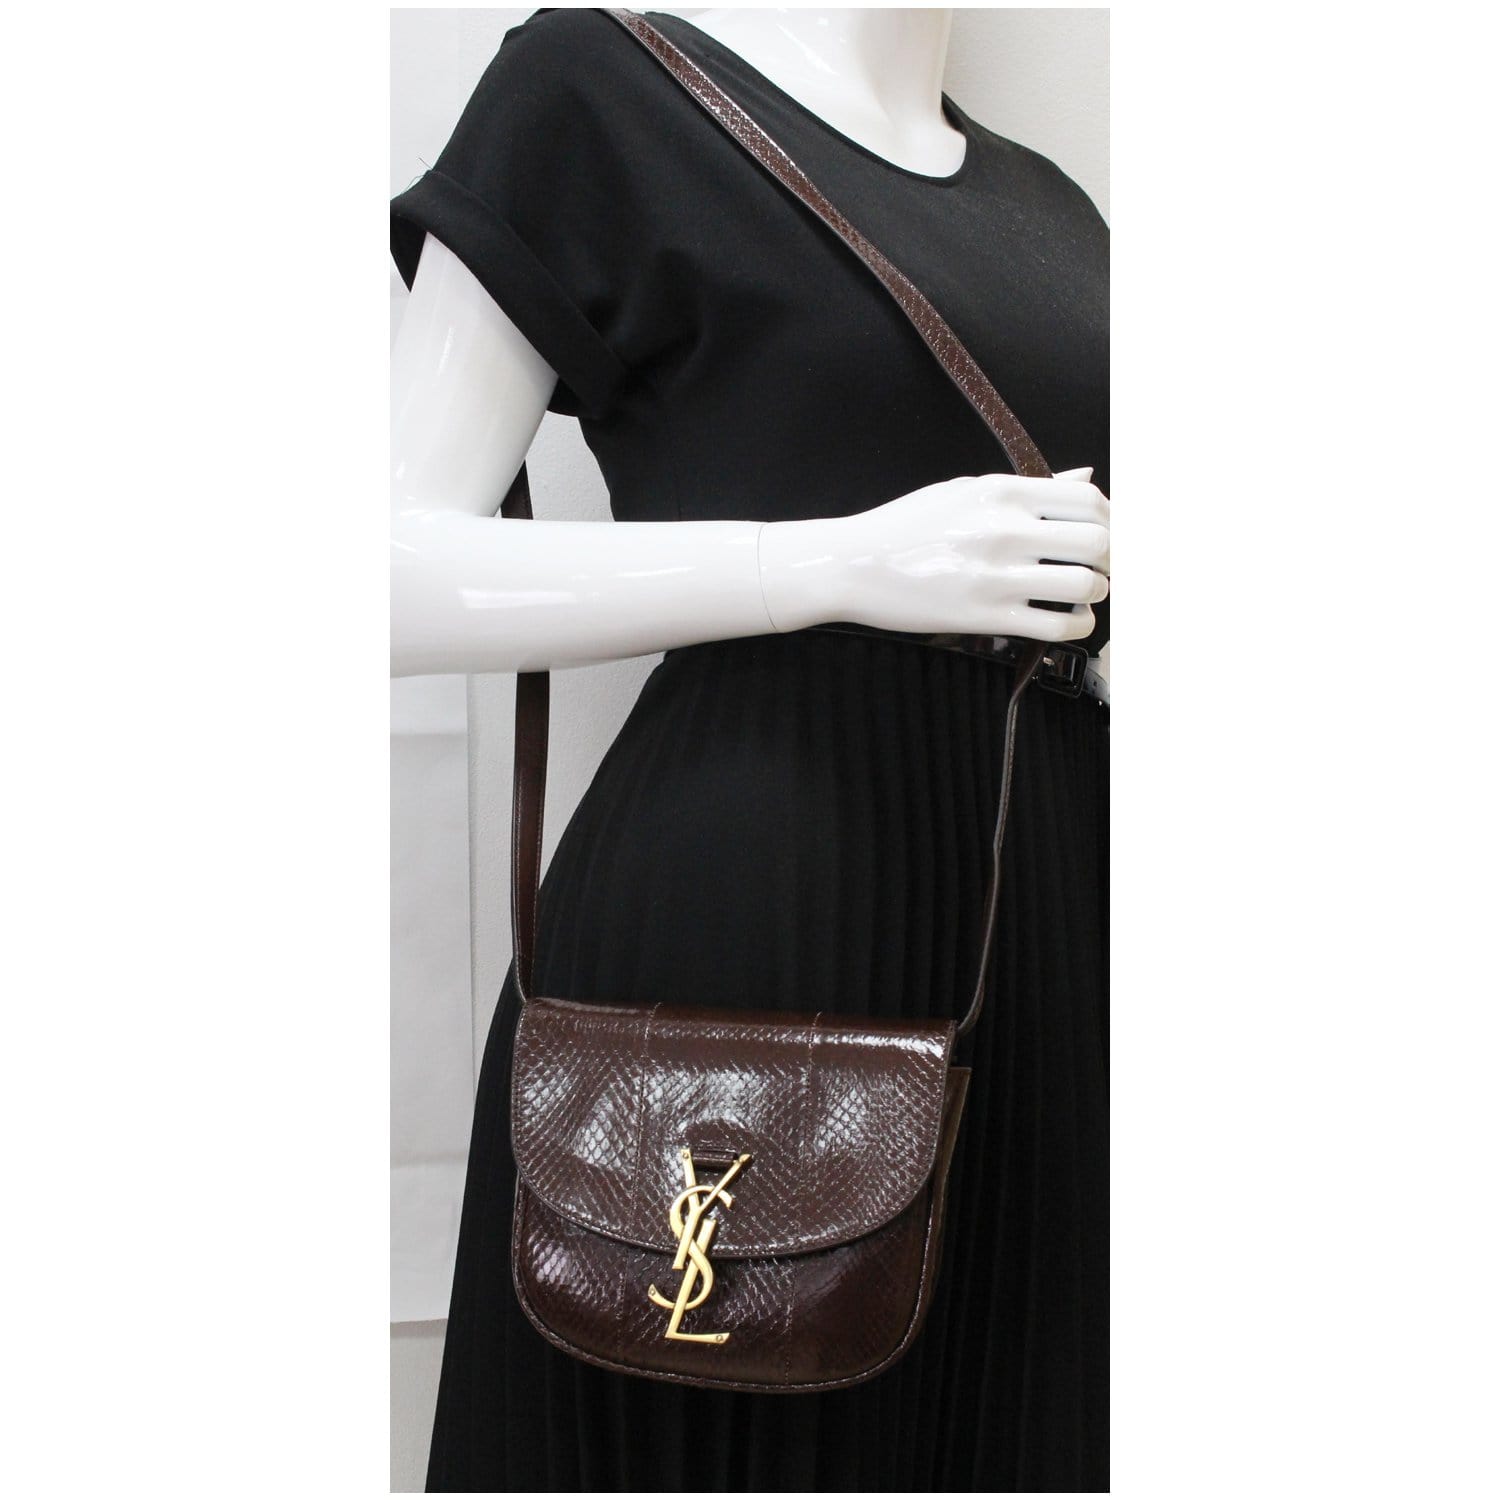 Kaia Small Leather Shoulder Bag in Black - Saint Laurent